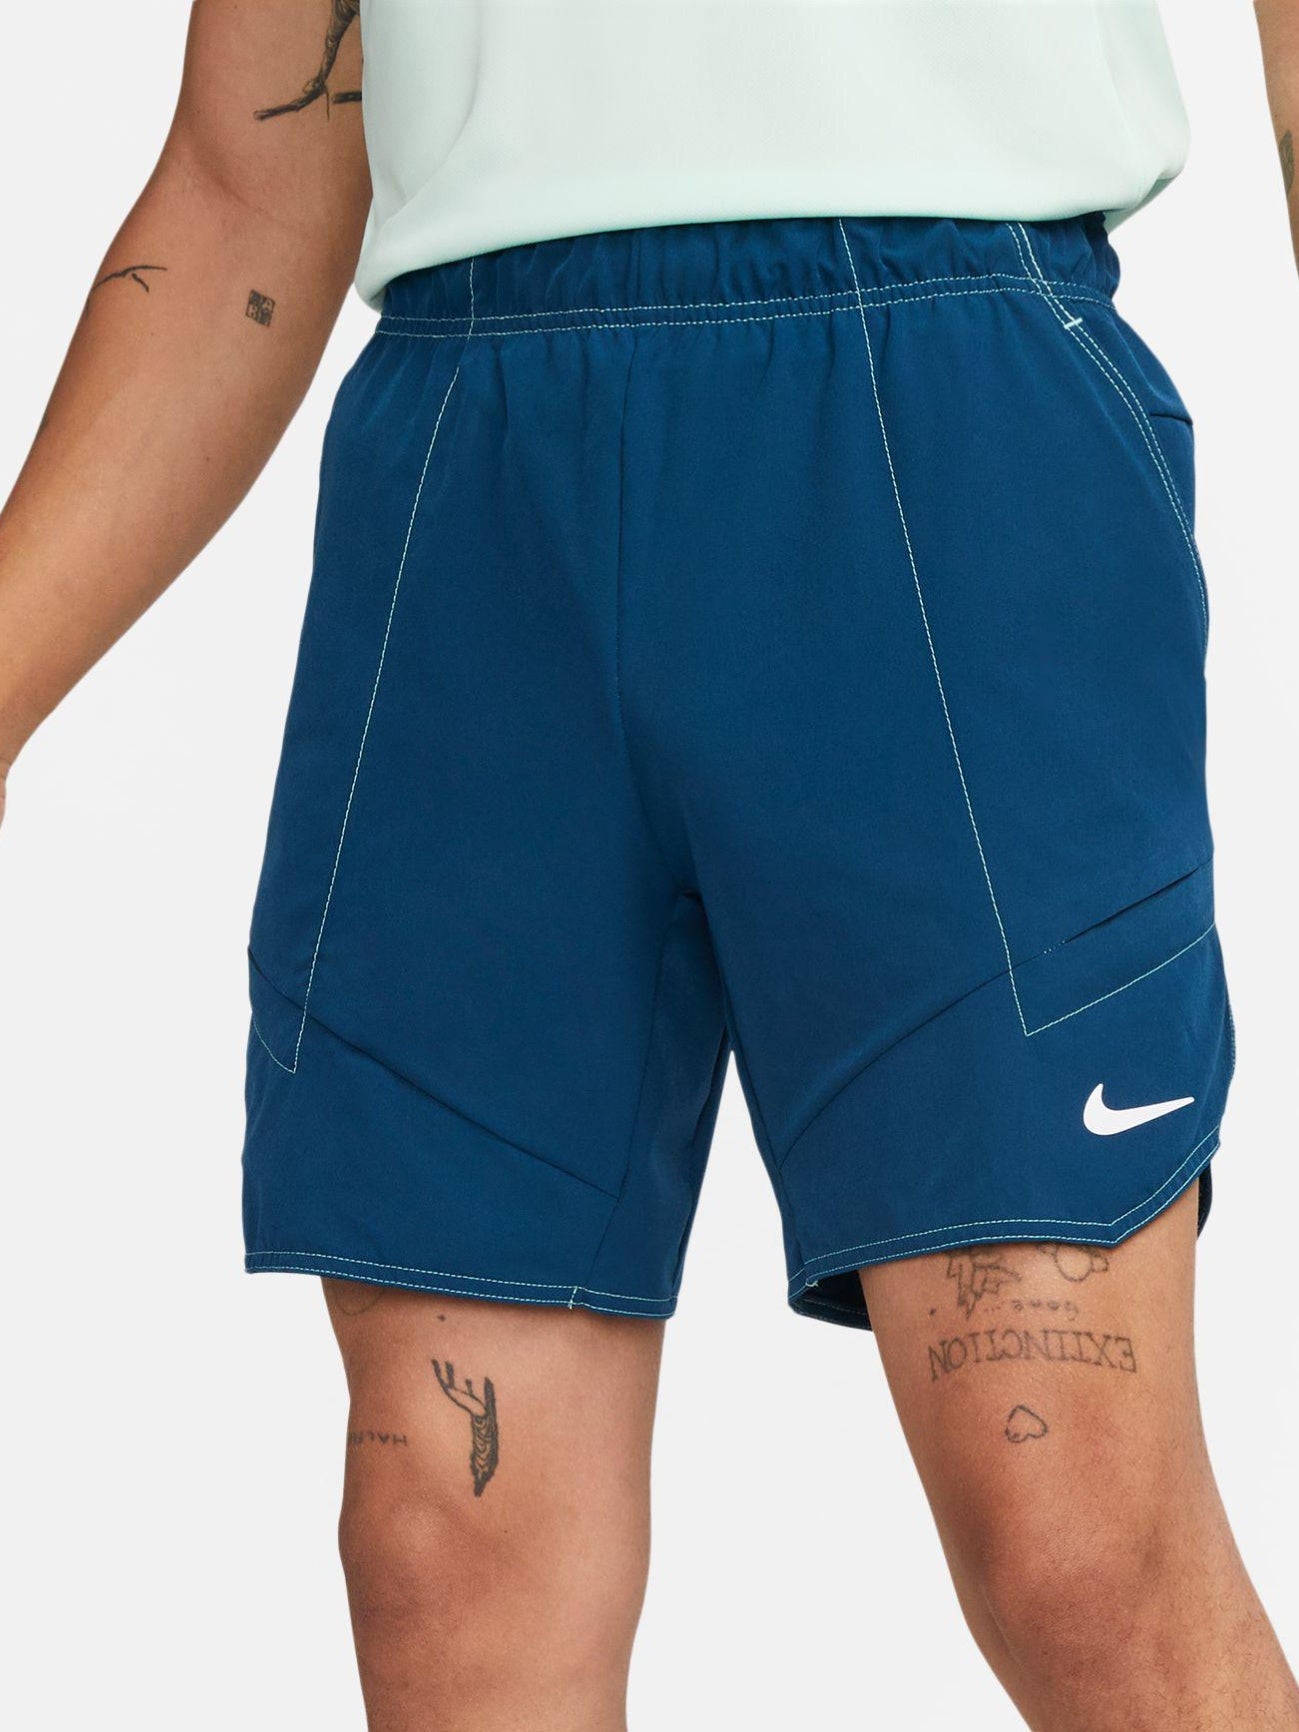 GFDRT Men‘s Sportswear Loose Knee-length Sport Shorts Tennis Zipper Basket Short M,Green 